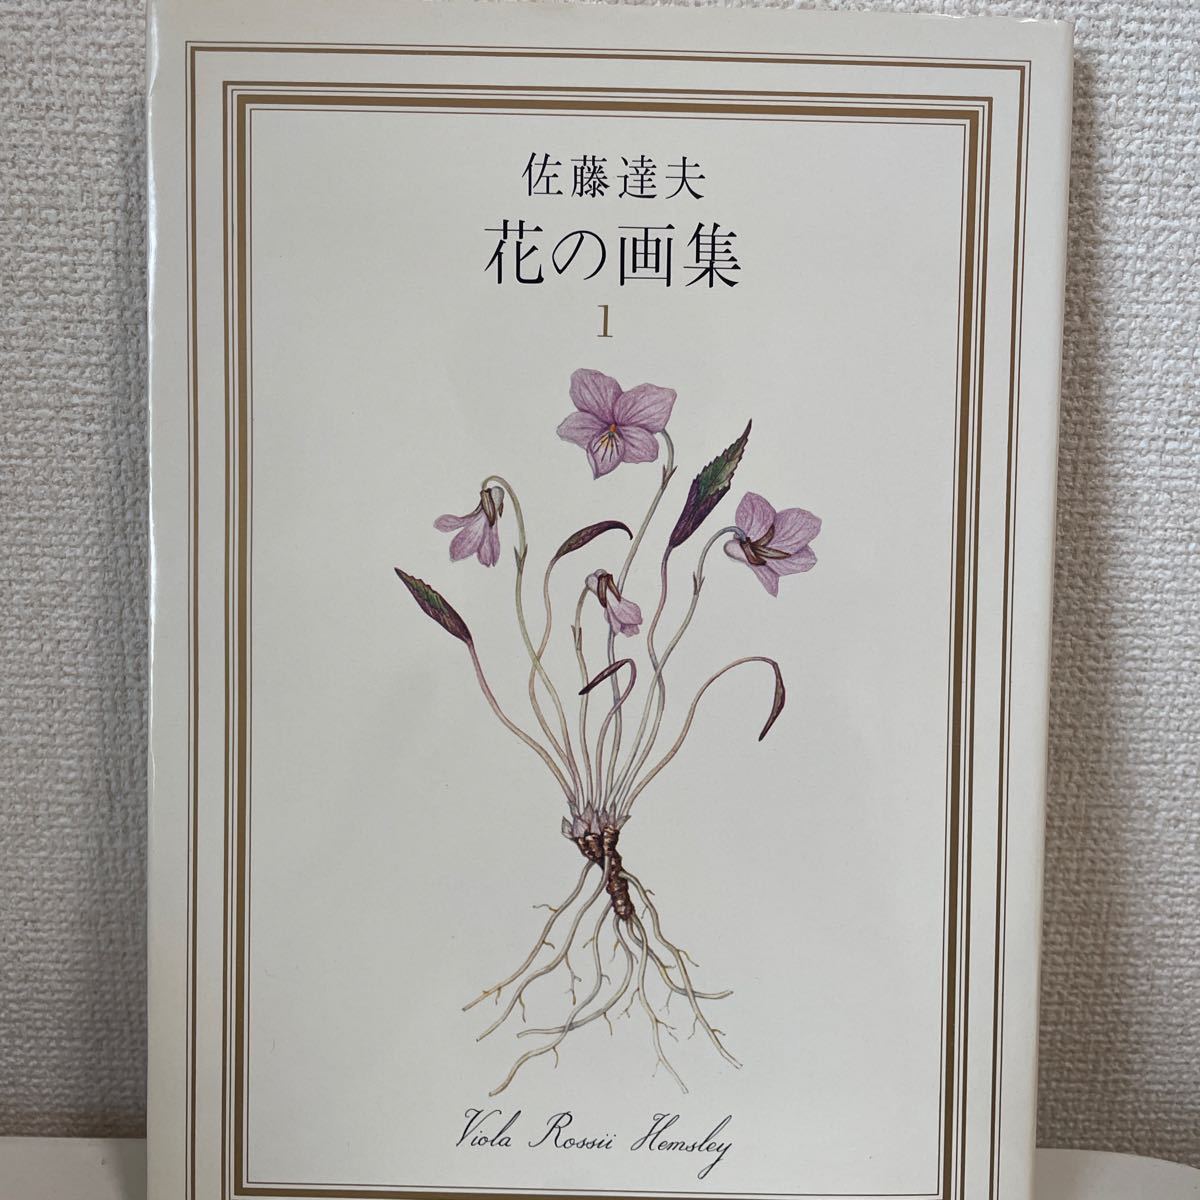 [Книга цветов Тацуо Сато 1] Художественная книга Чуничи Симбун, штаб-квартира в Токио, 1971 год, Рисование, Книга по искусству, Коллекция, Книга по искусству